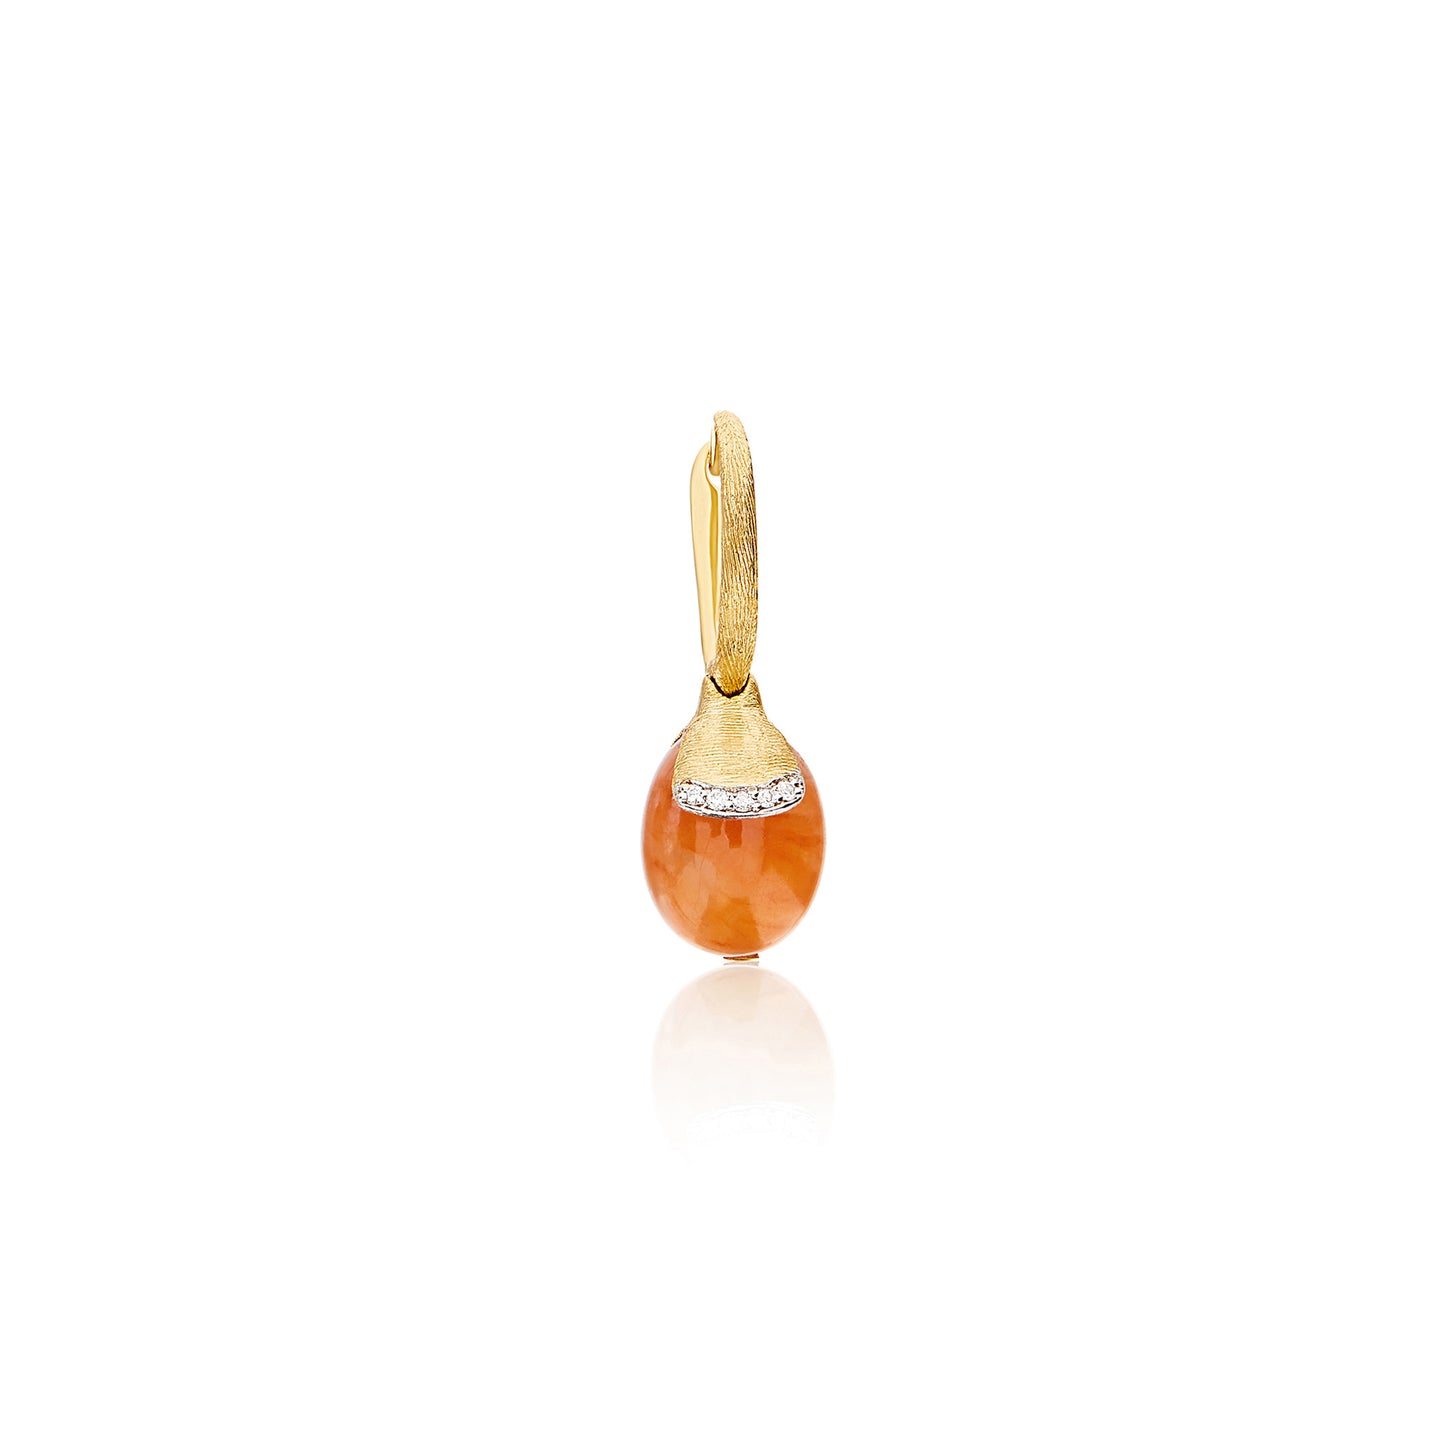 PETRA "AMULETS" CILIEGINE GOLD AND ORANGE AVENTURINE EARRINGS WITH DIAMONDS (SMALL)